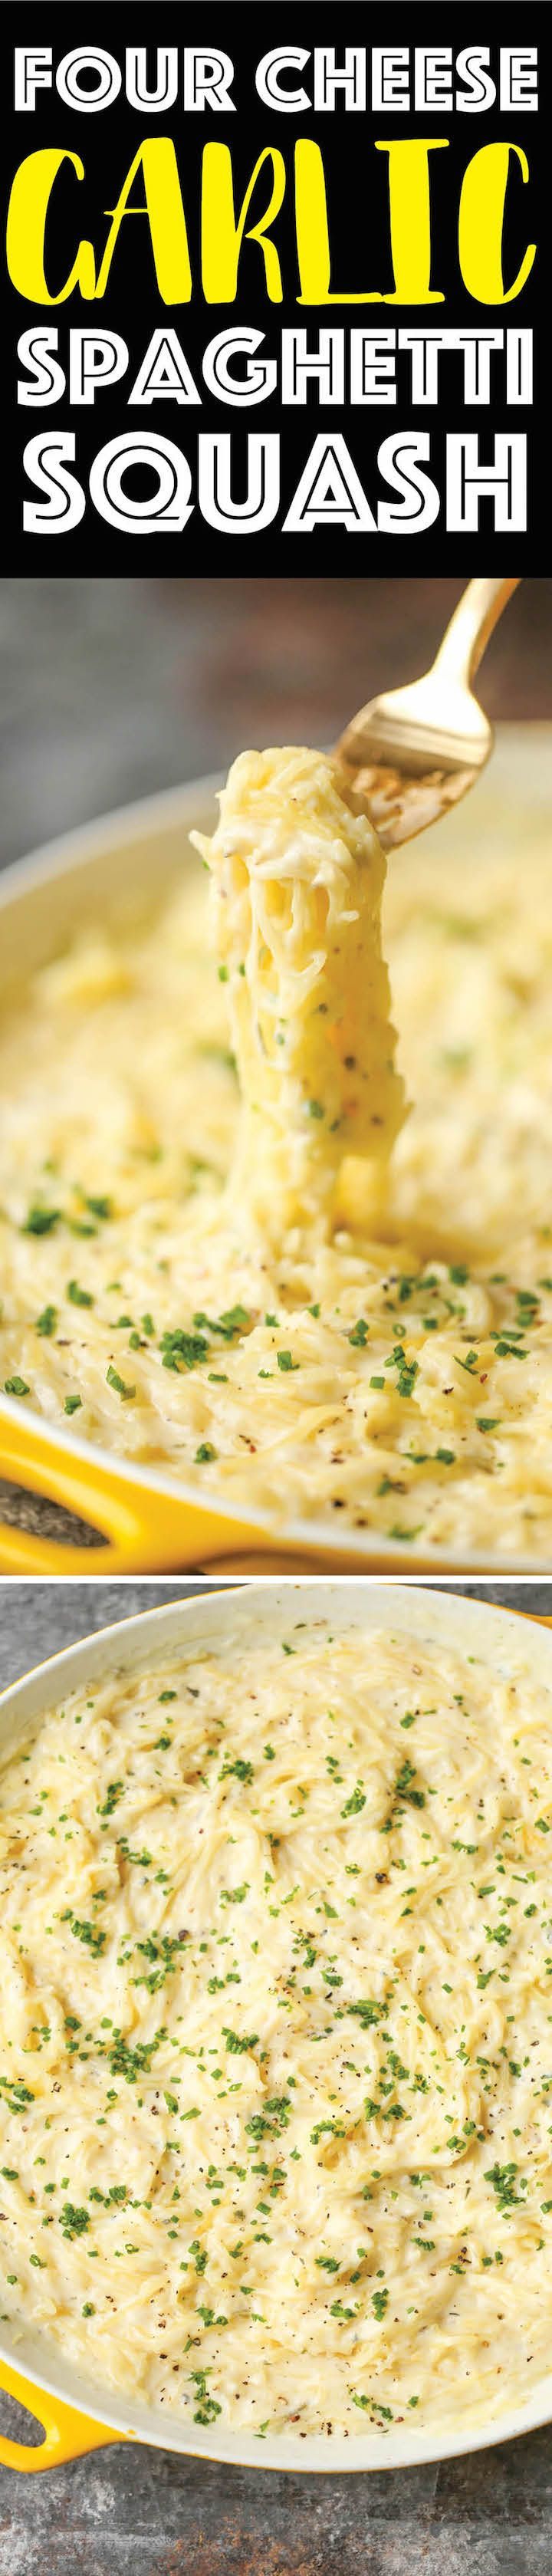 Four Cheese Garlic Spaghetti Squash – A skinny version of everyones favorite